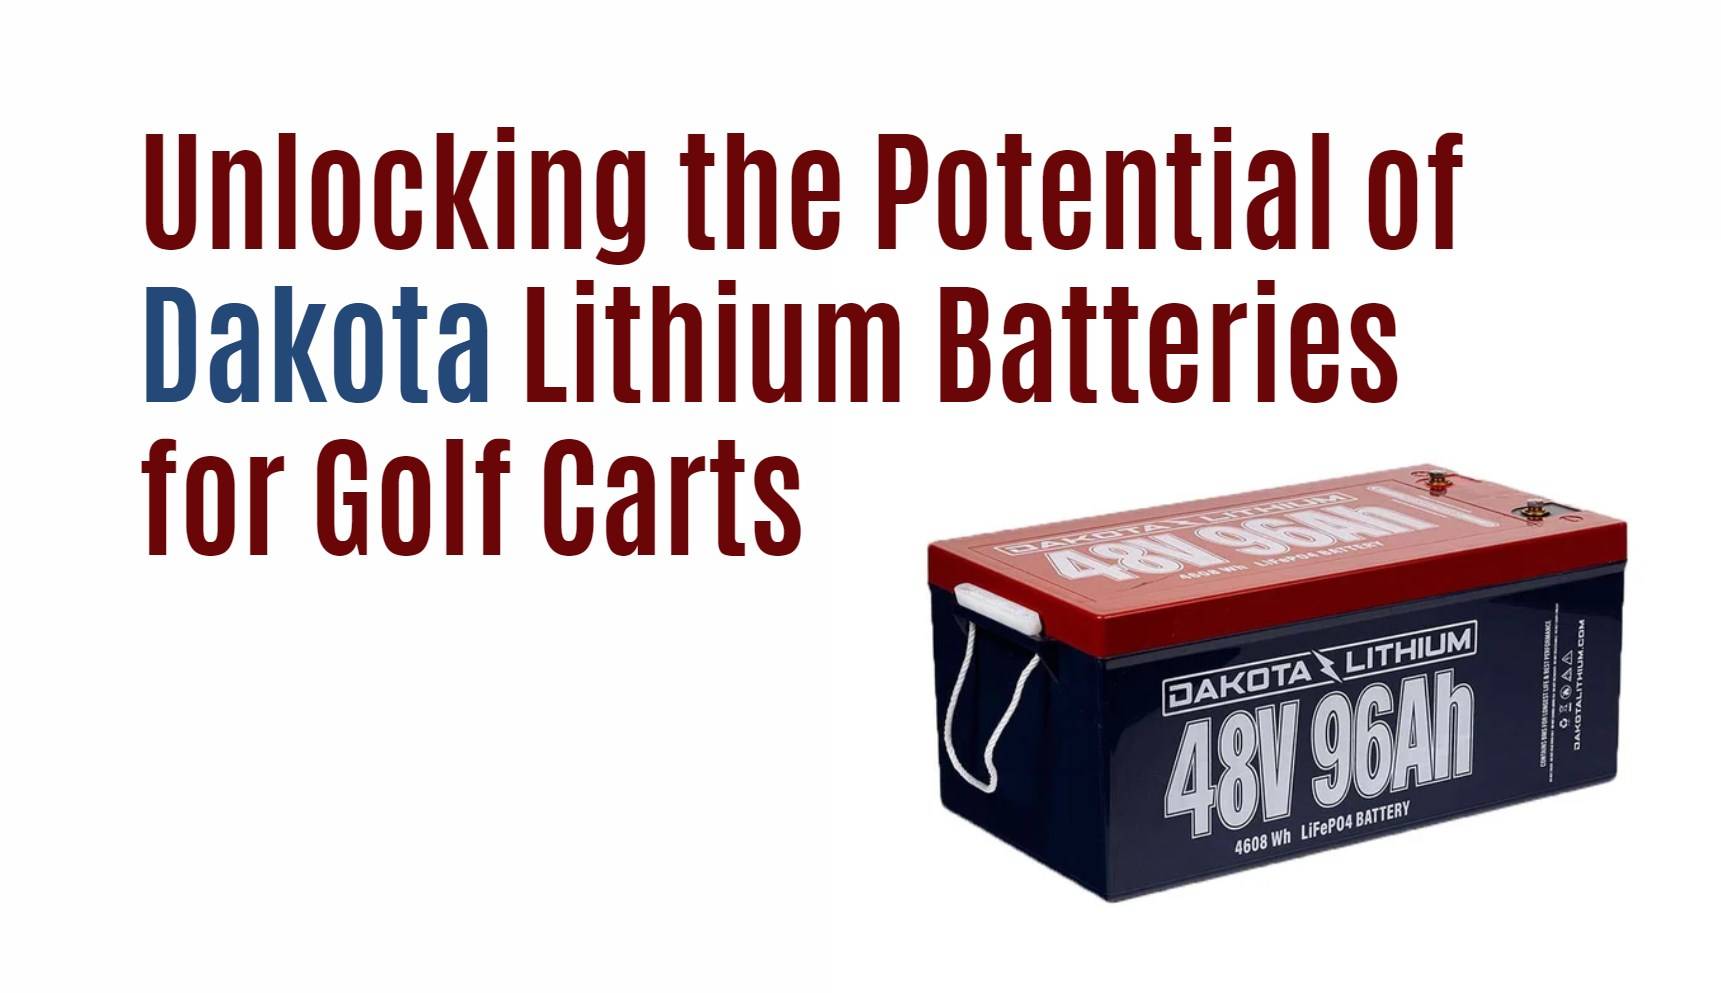 Unlocking the Potential of Dakota Lithium Batteries for Golf Carts